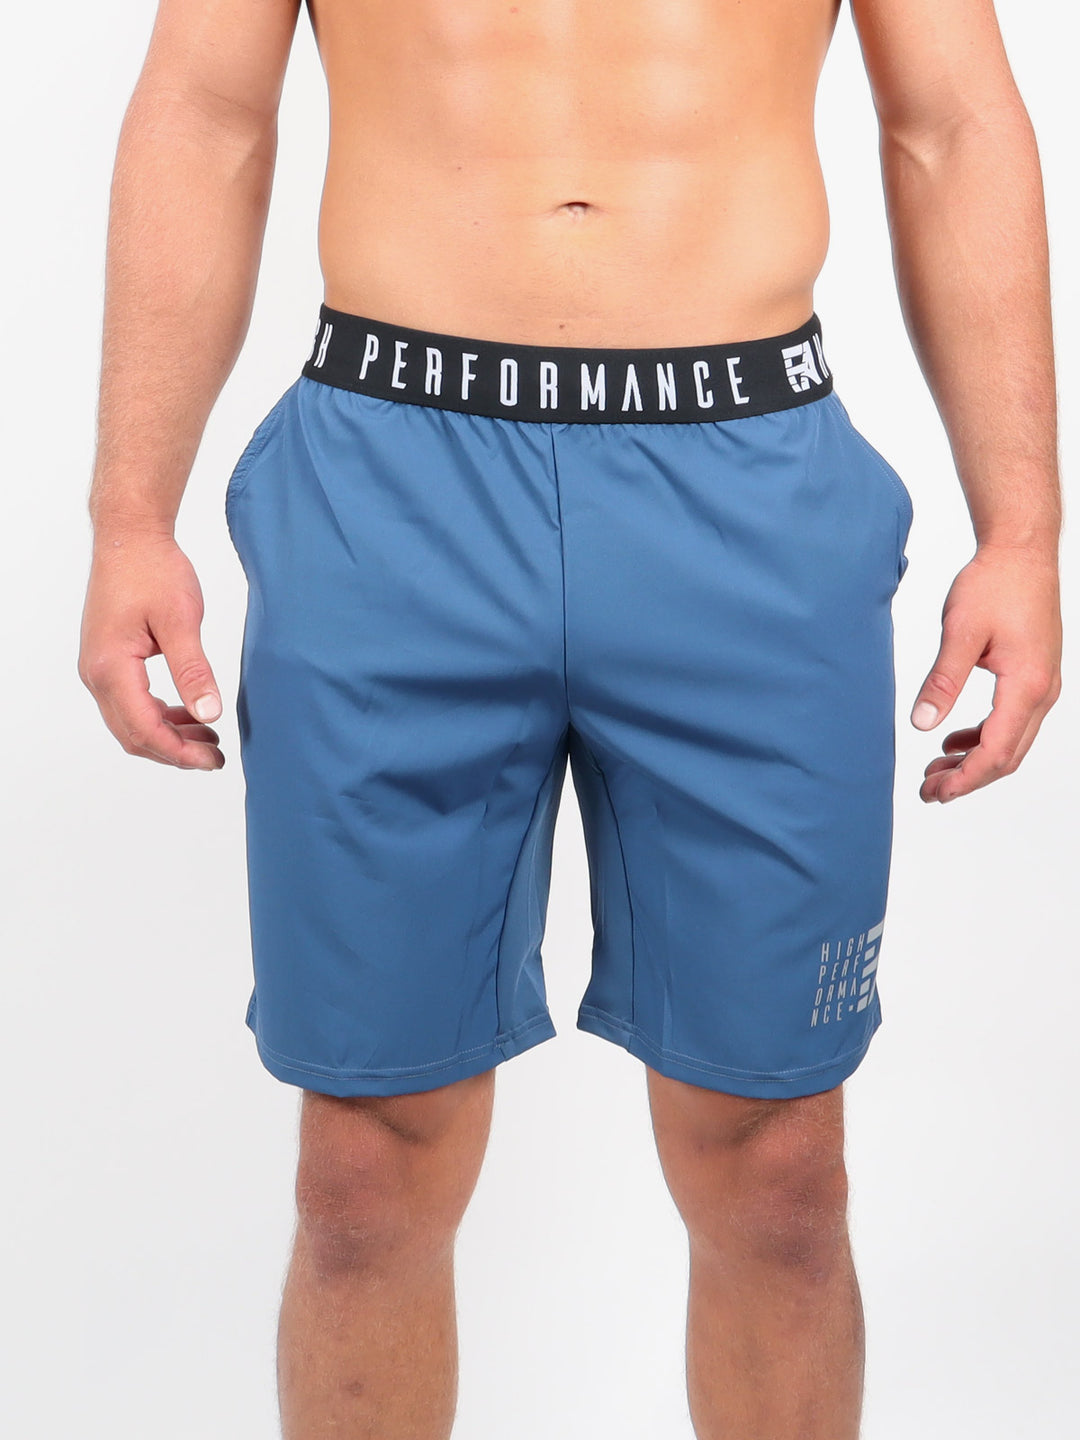 FA - High Performance - Activity Shorts - Ocean Blue